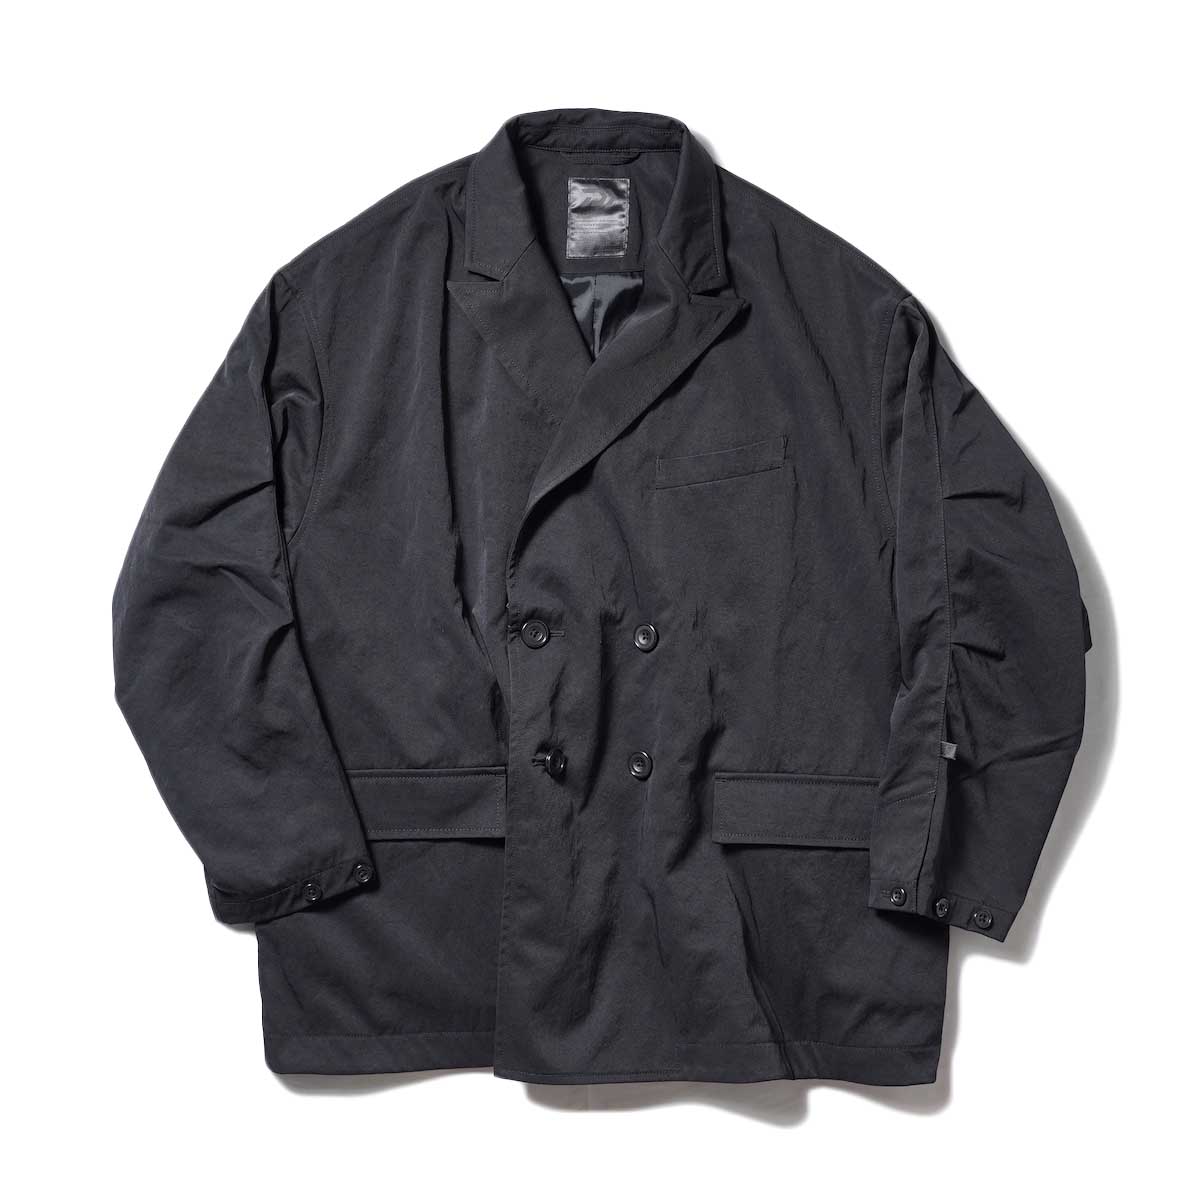 DAIWA PIER39 / Tech Double-Breasted Jacket Twill (Black)